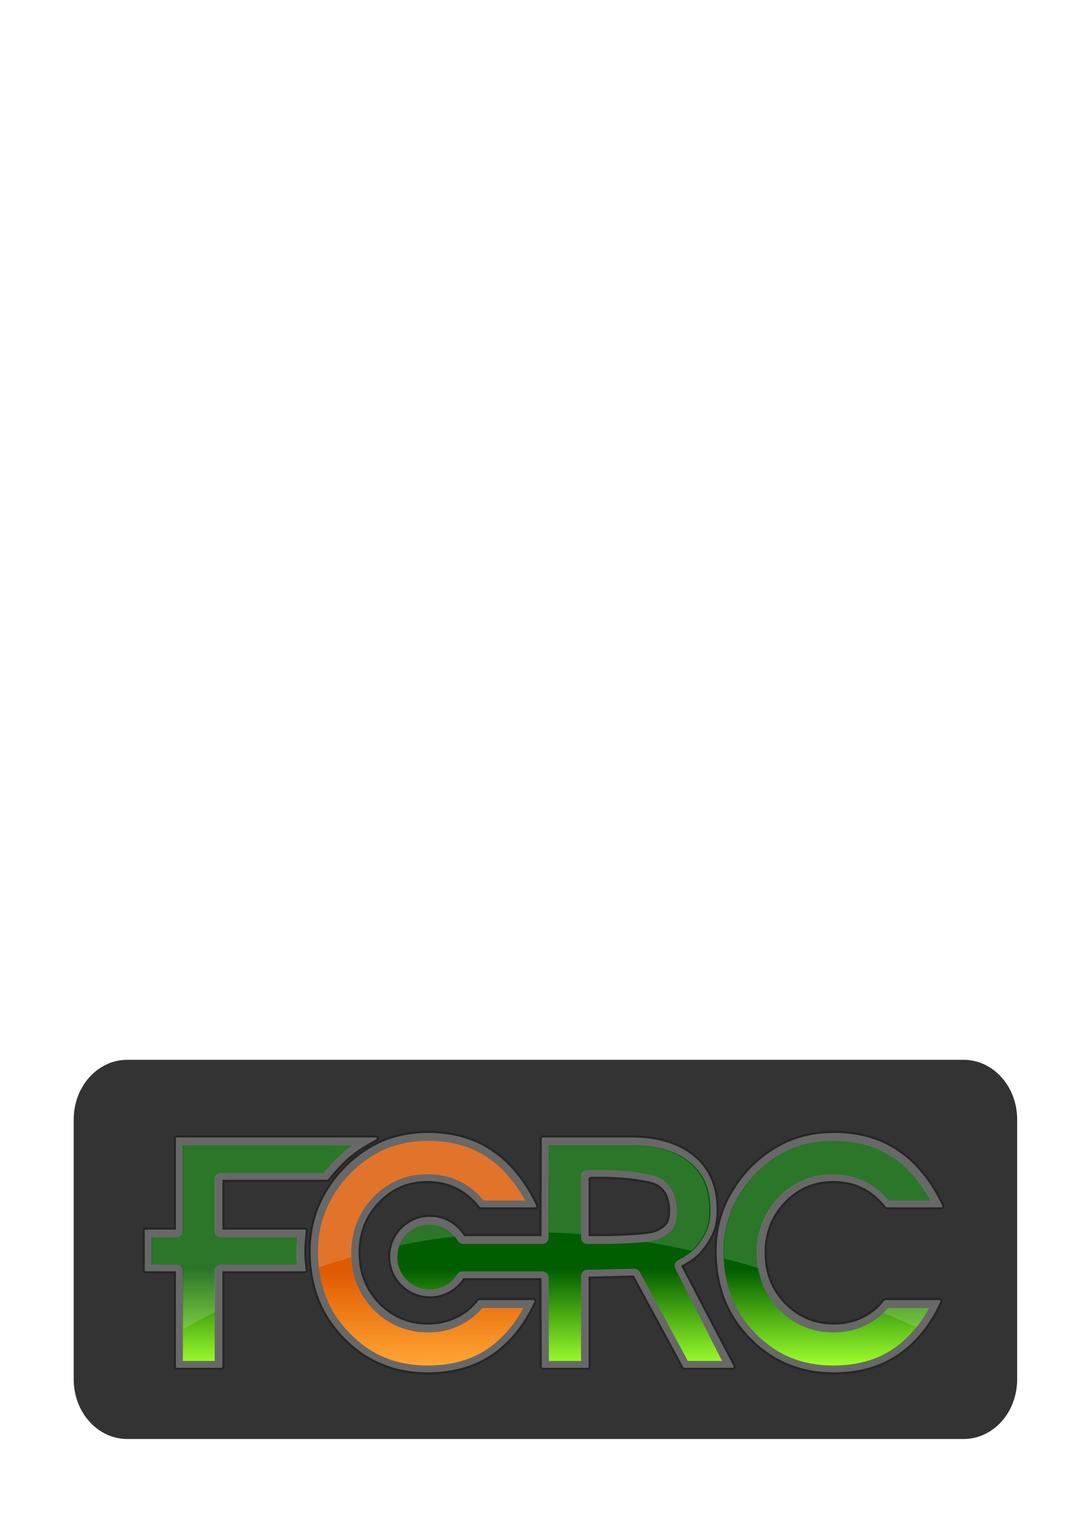 FCRC logo text 5 png transparent